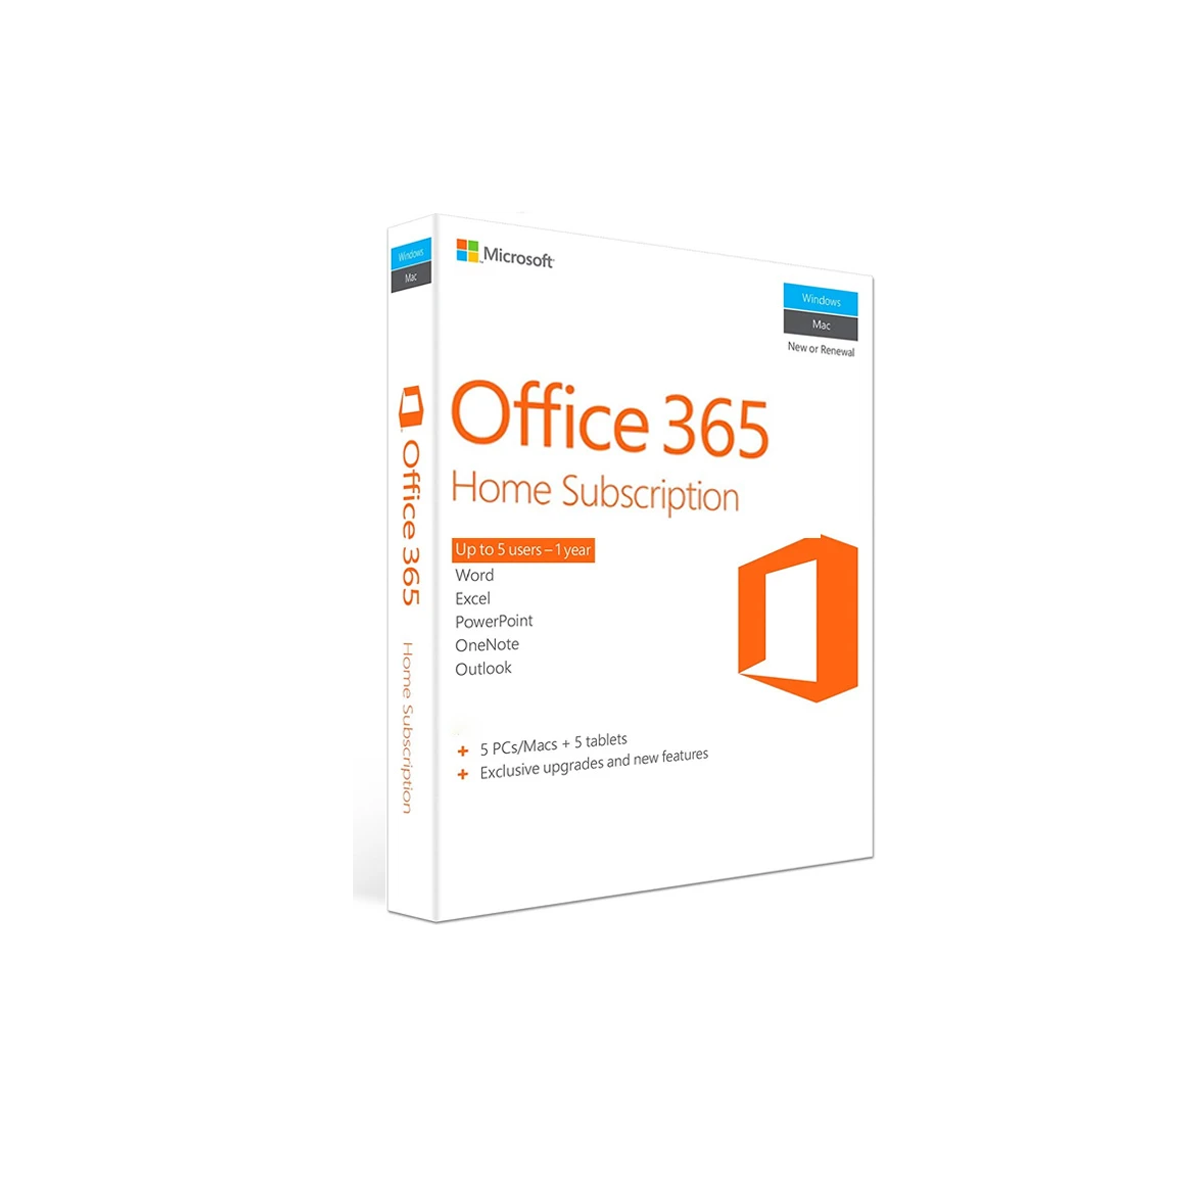 micorosoft office 365